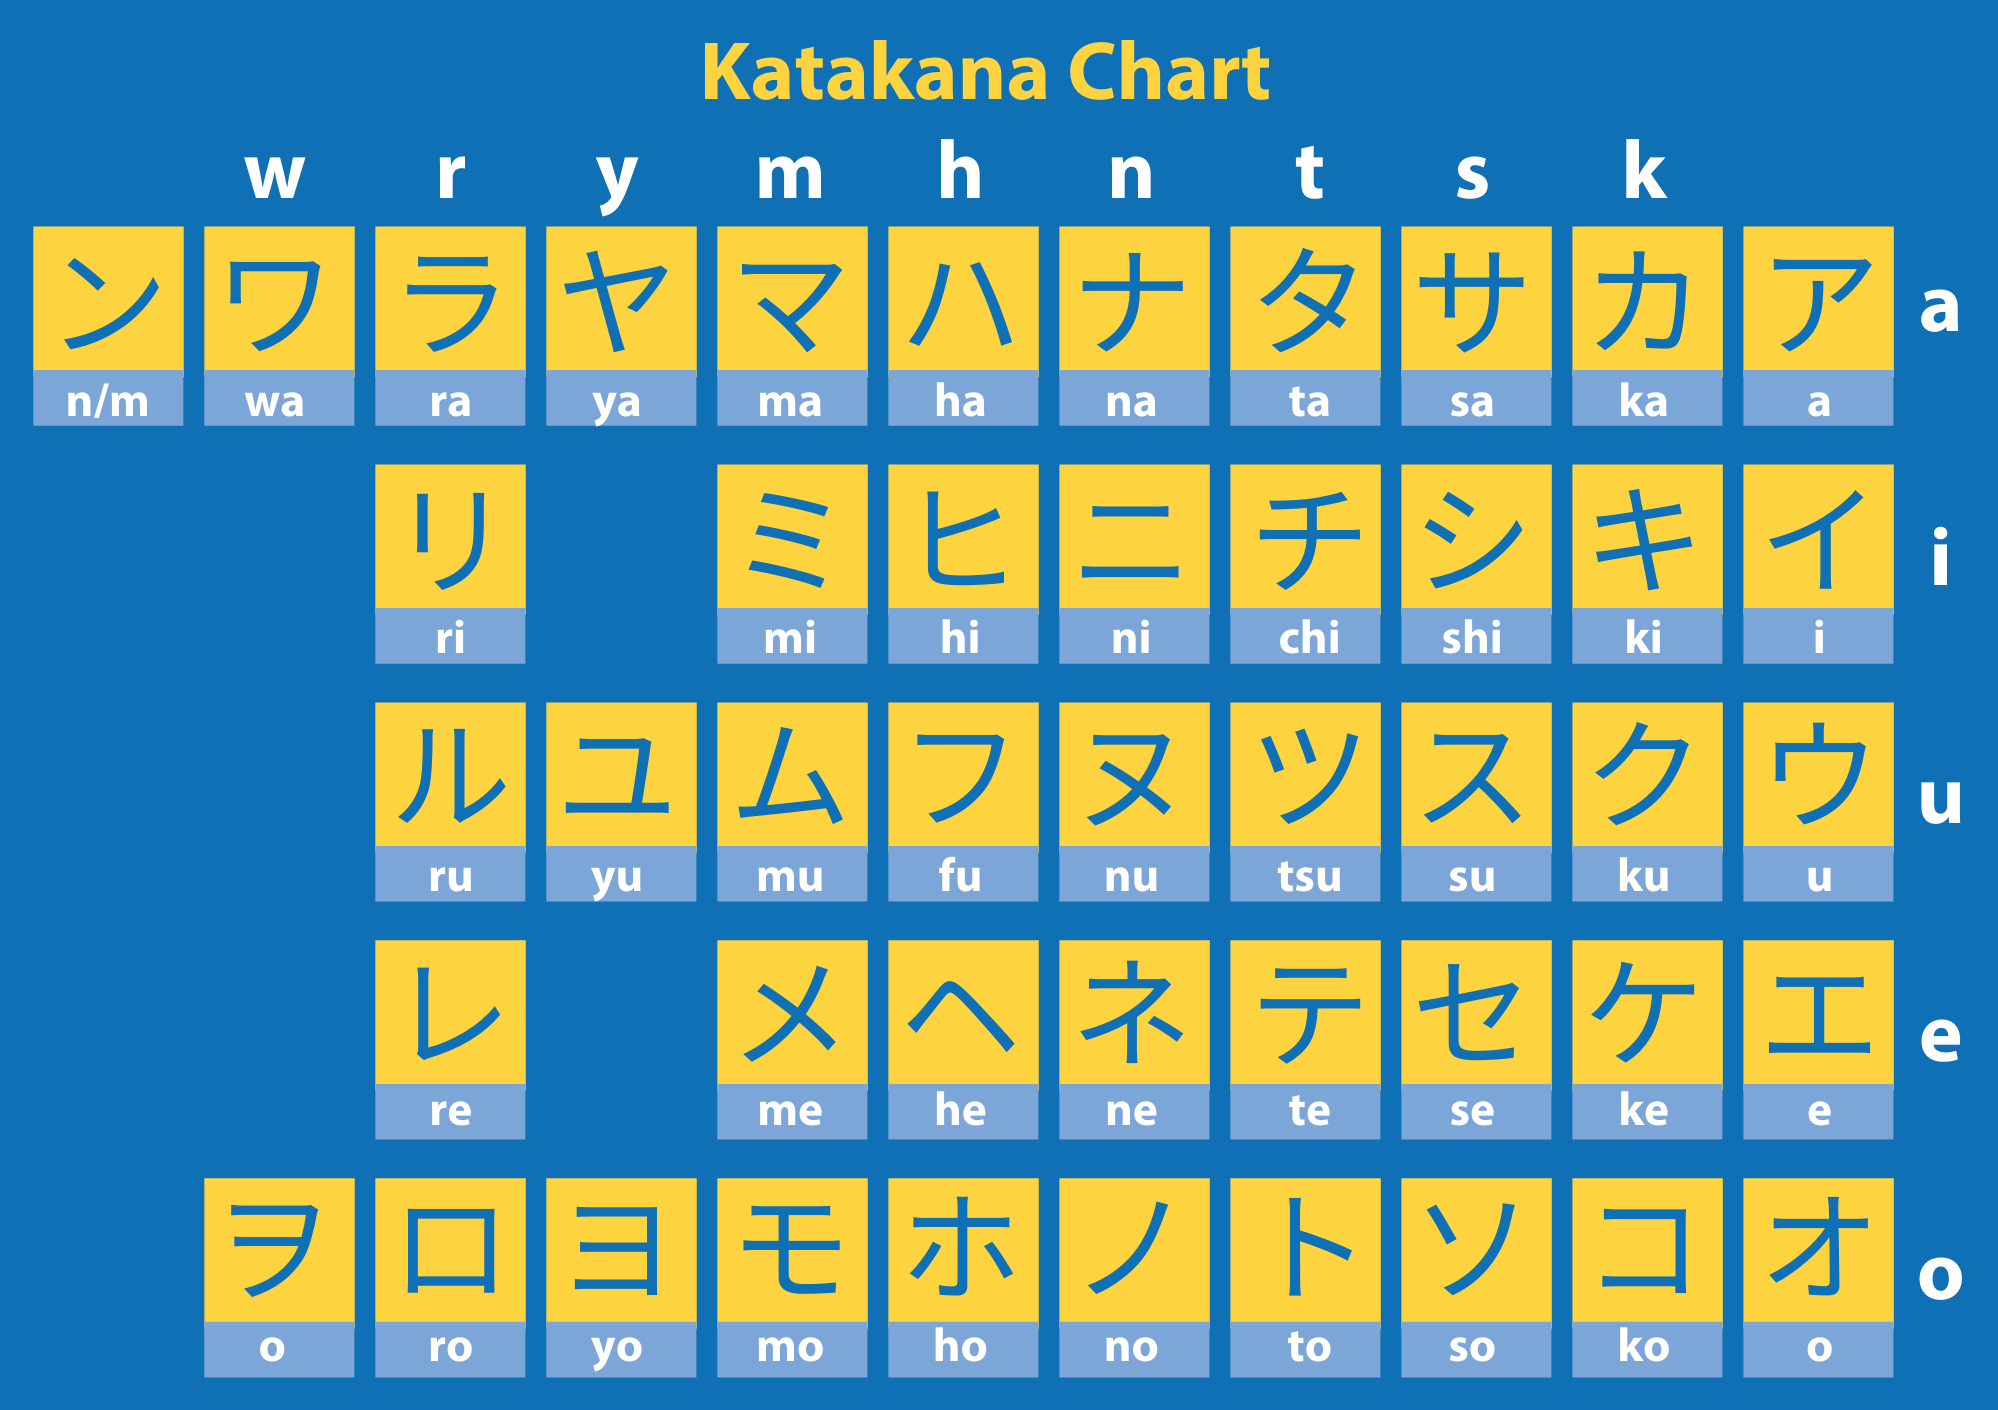 Bảng chữ cái Kata Nhật Bản